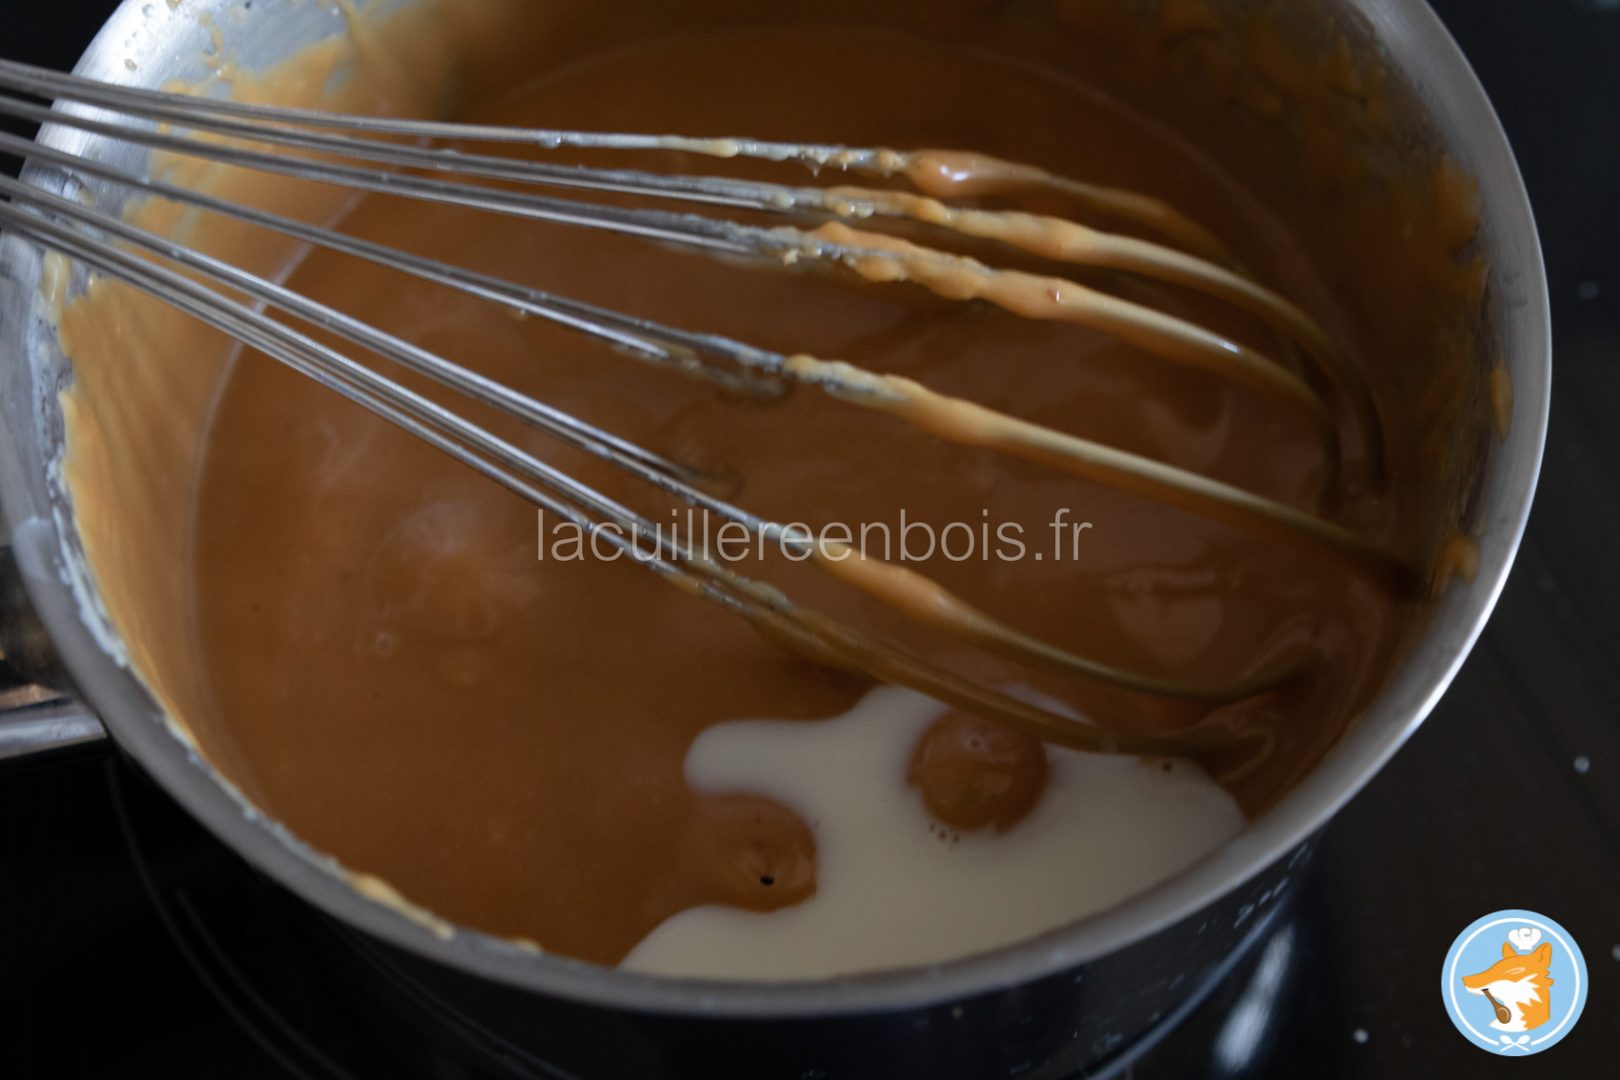 lacuillereenbois.fr_tartelette_façon_snickers_chocolat_caramel_cacahuètes